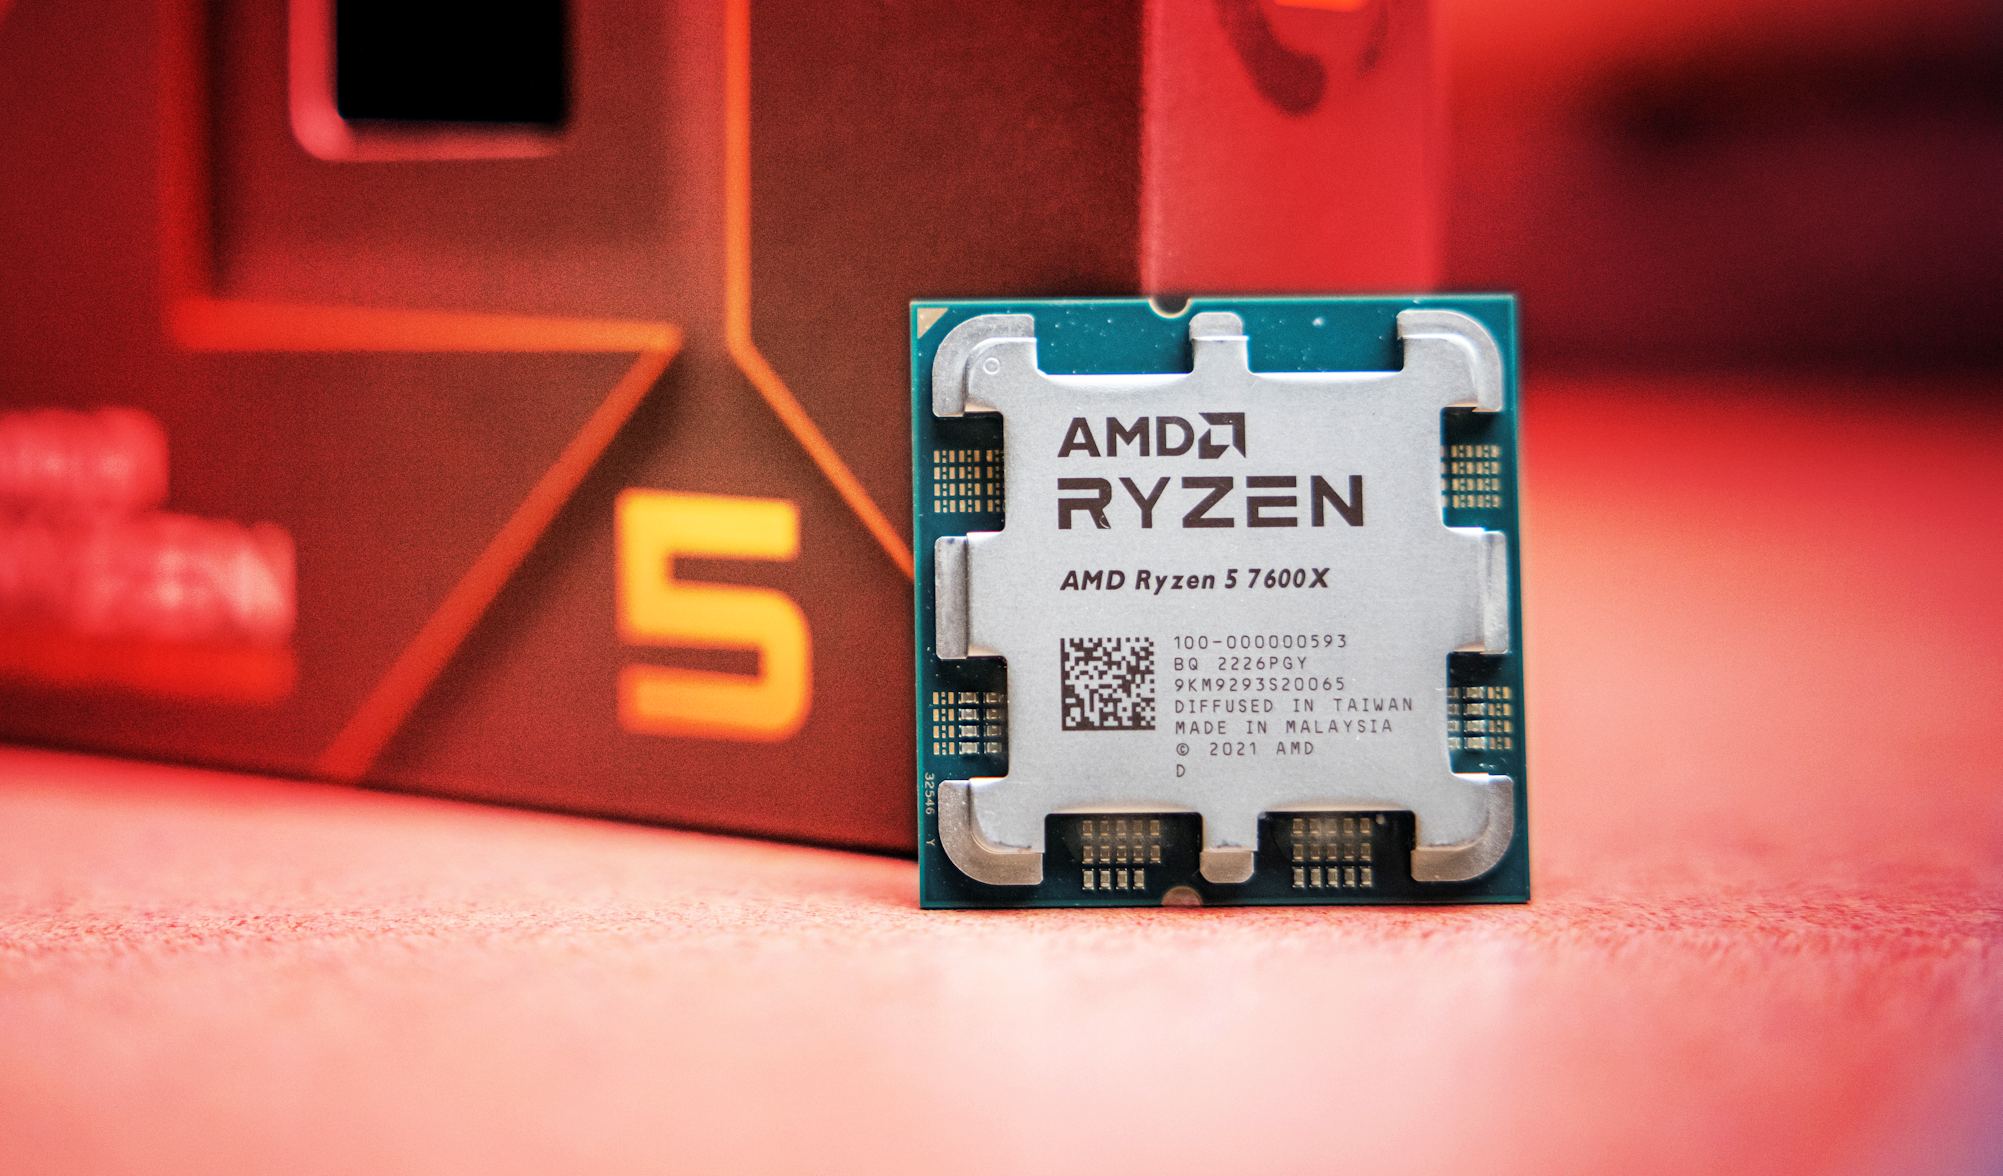 Intel/AMD CPU price war continues, AMD Ryzen 5 7600X is now